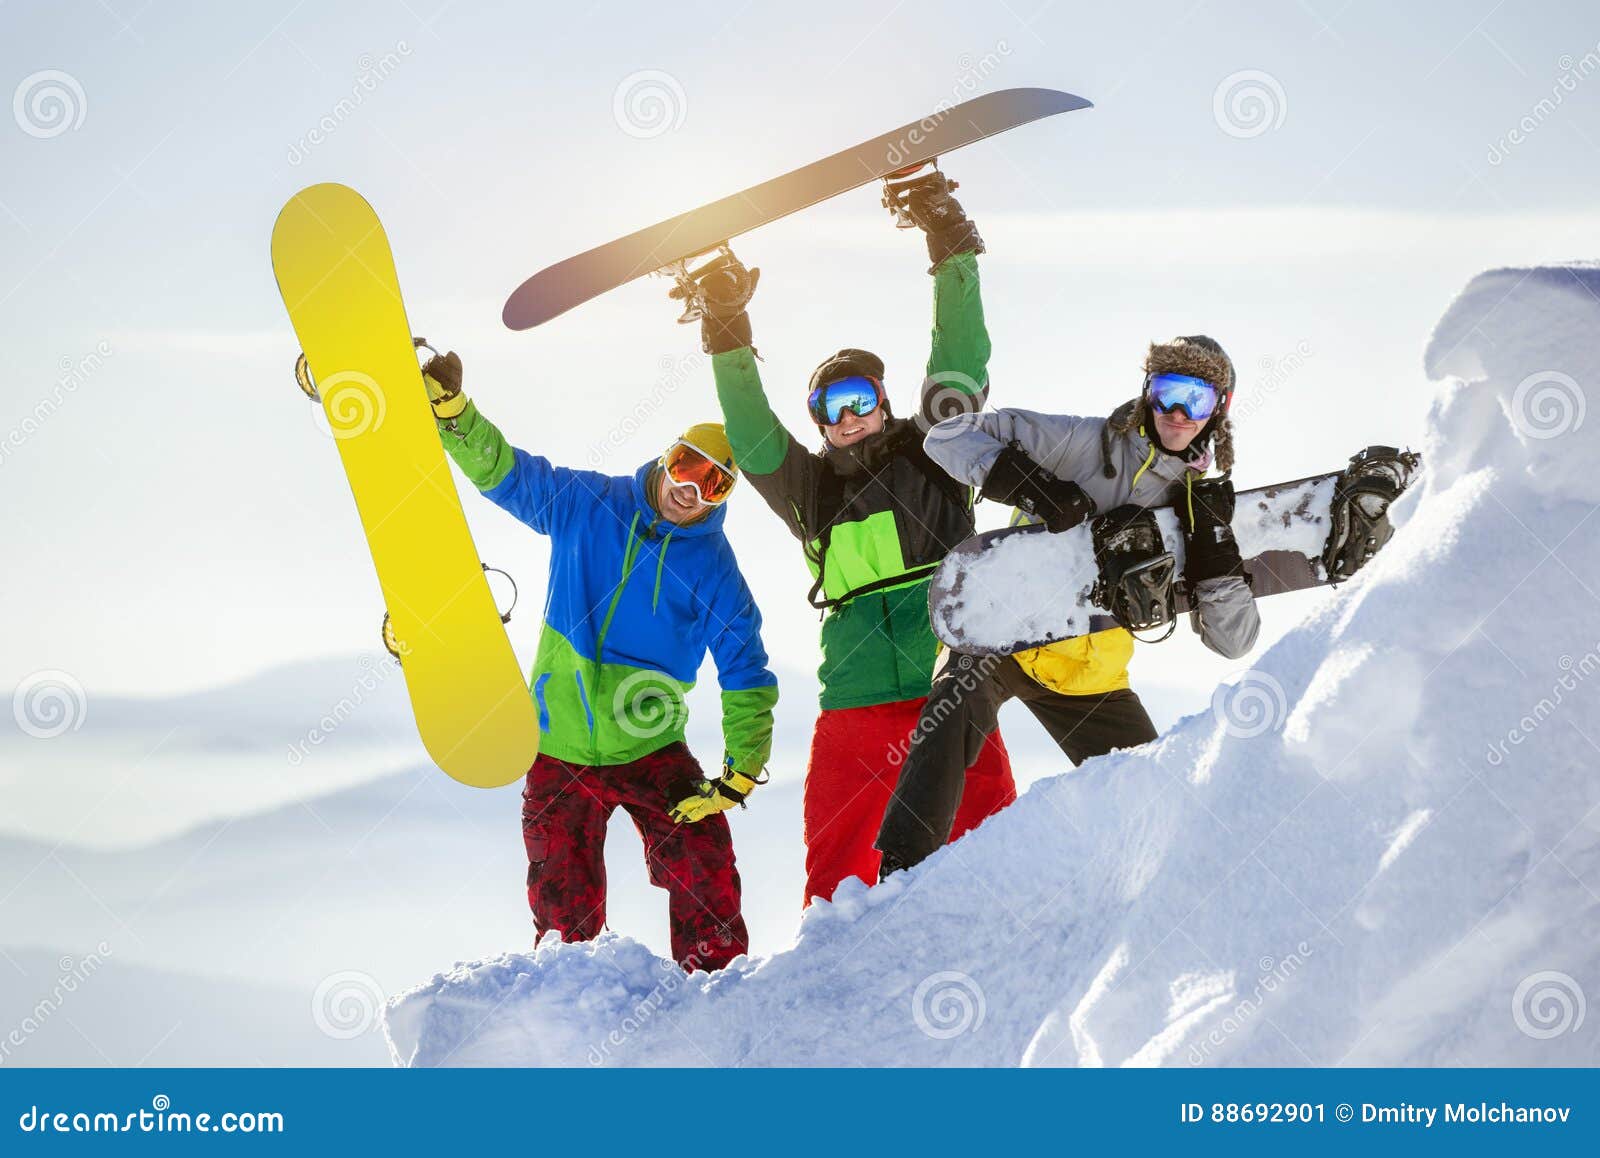 Vakman Monografie Zich afvragen 2,516 Snowboarders Fun Stock Photos - Free & Royalty-Free Stock Photos from  Dreamstime